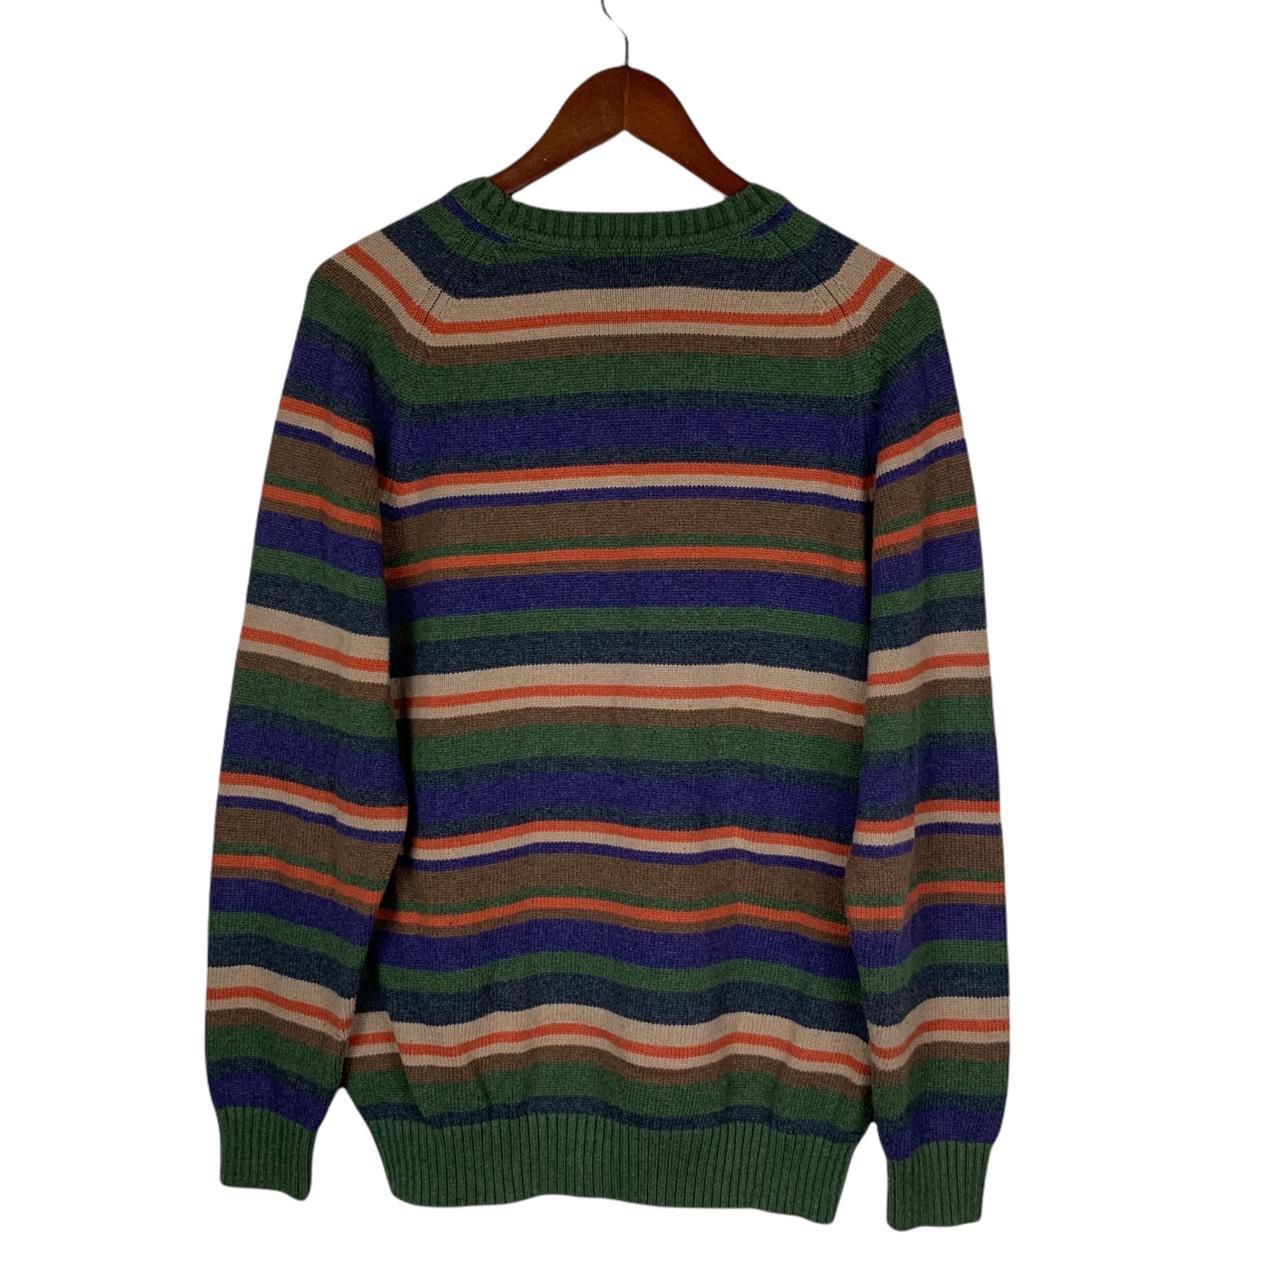 Vintage St. John’s bay knit striped sweater crewneck... - Depop